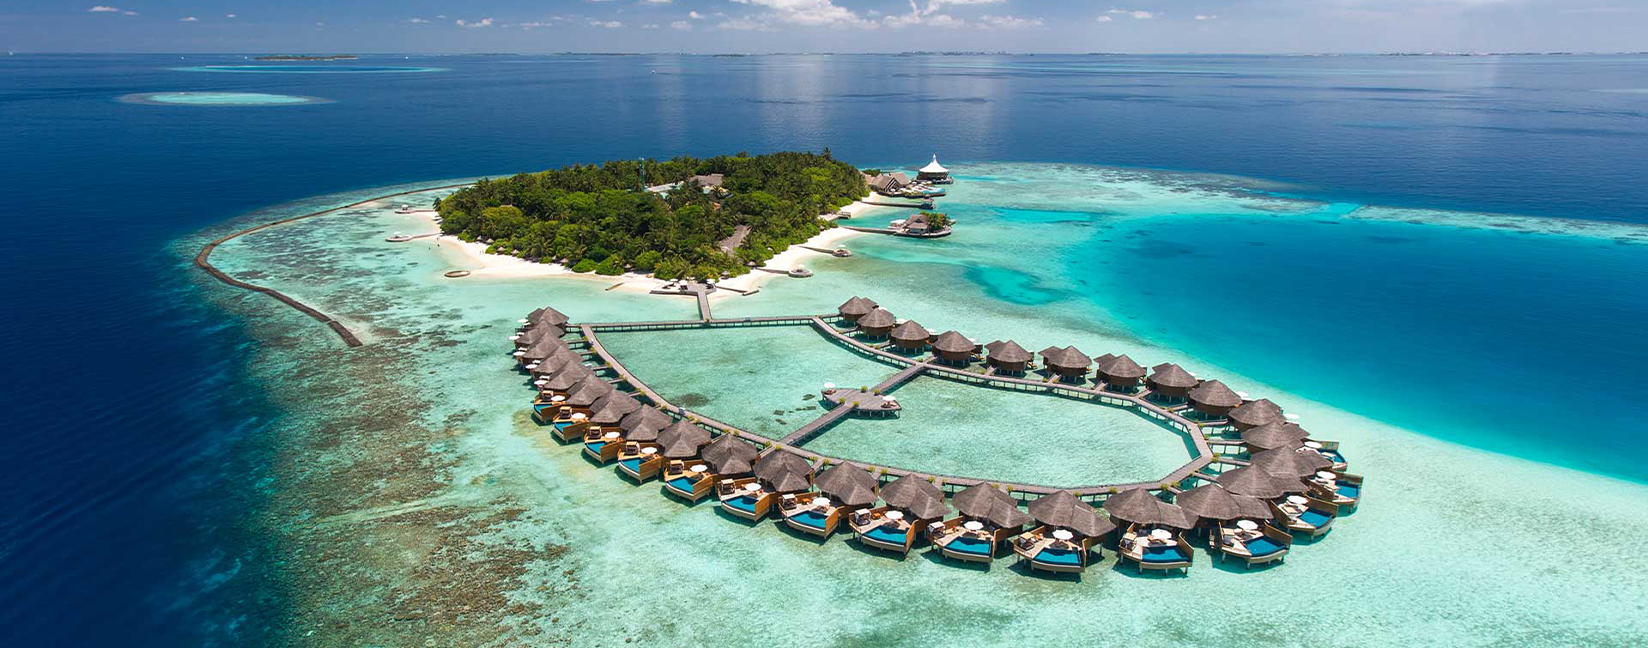 Top Paradise Islands Maldives